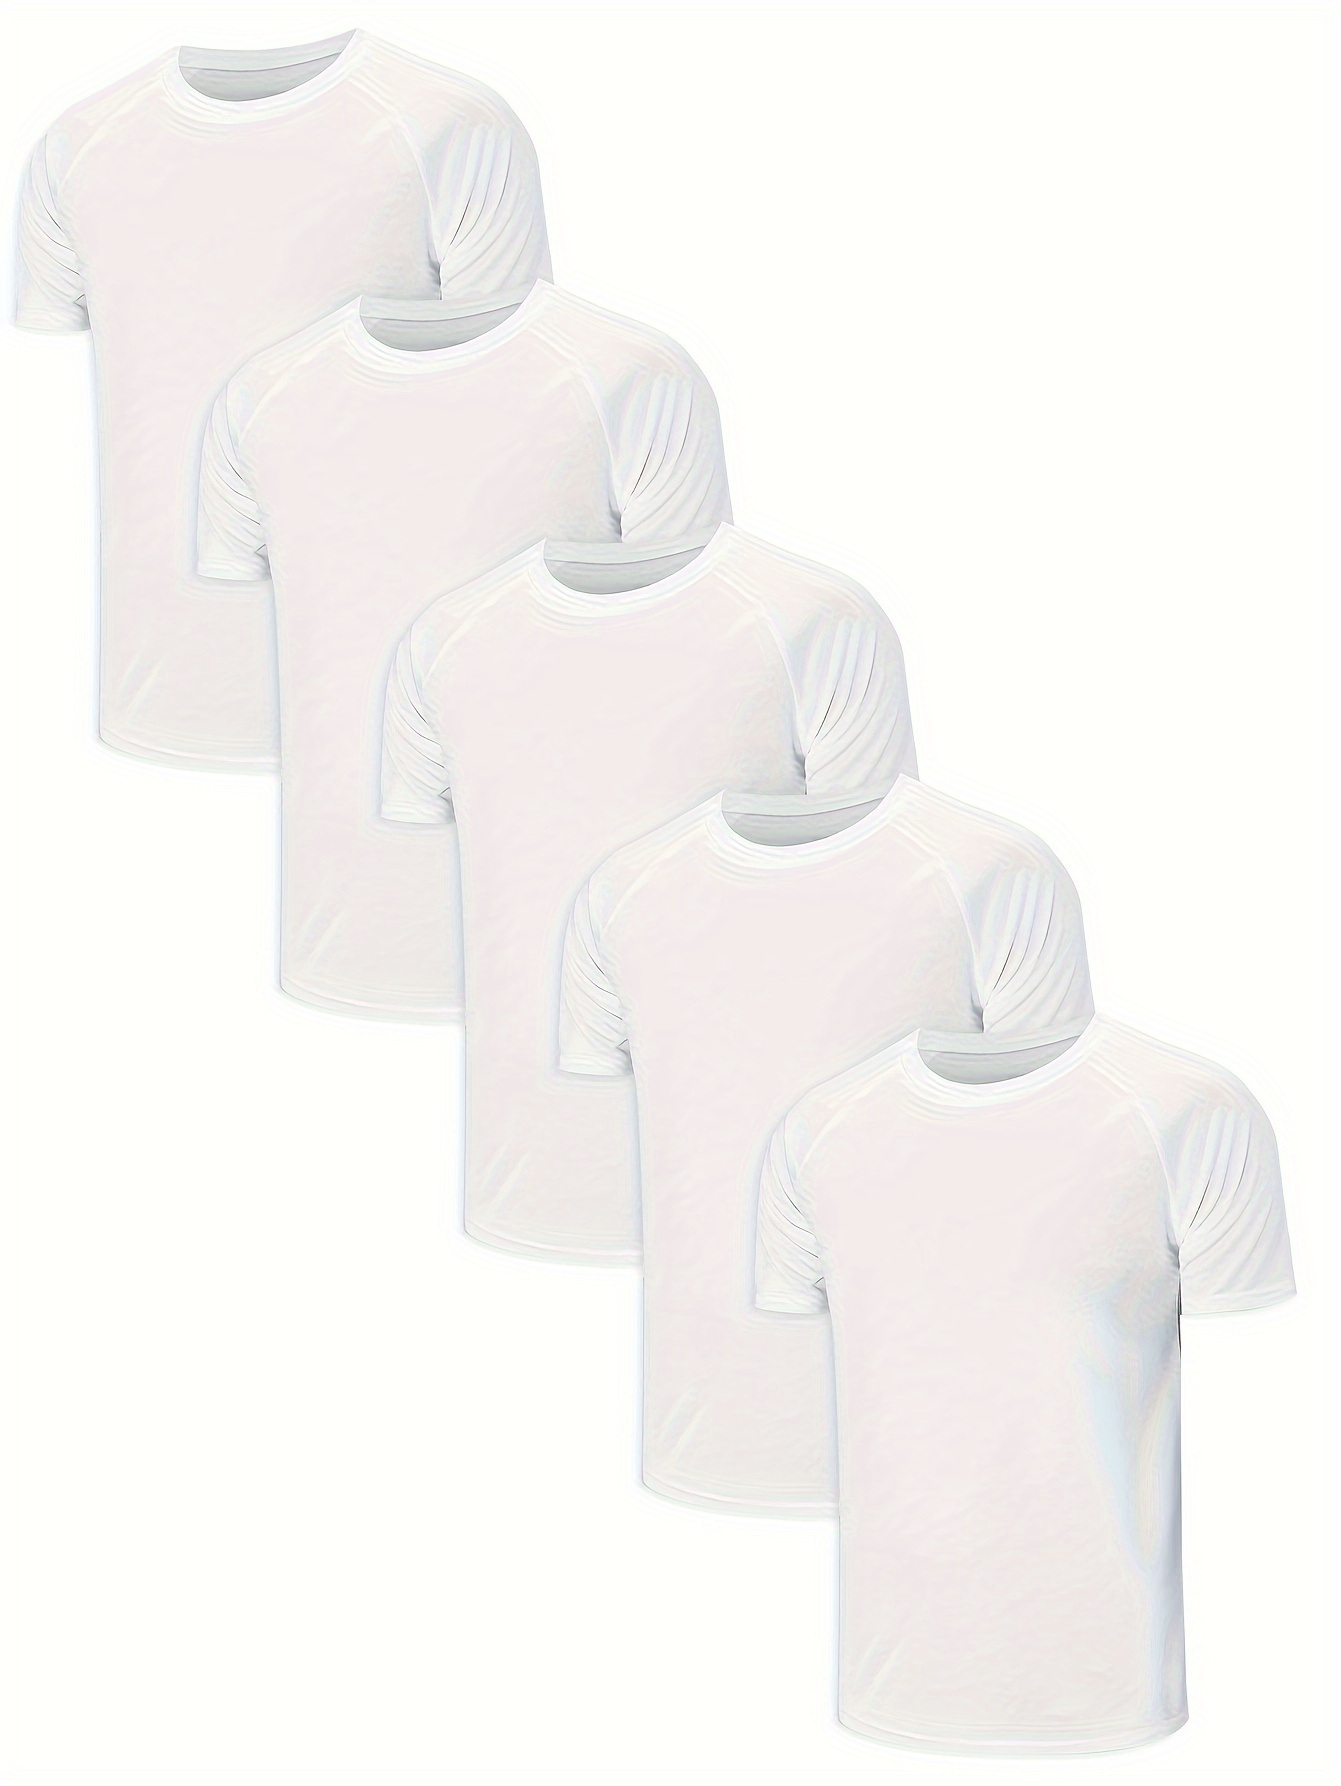 ZENGVEE T-Shirts Men Quick Dry Workout Shirts Running Shirts Men